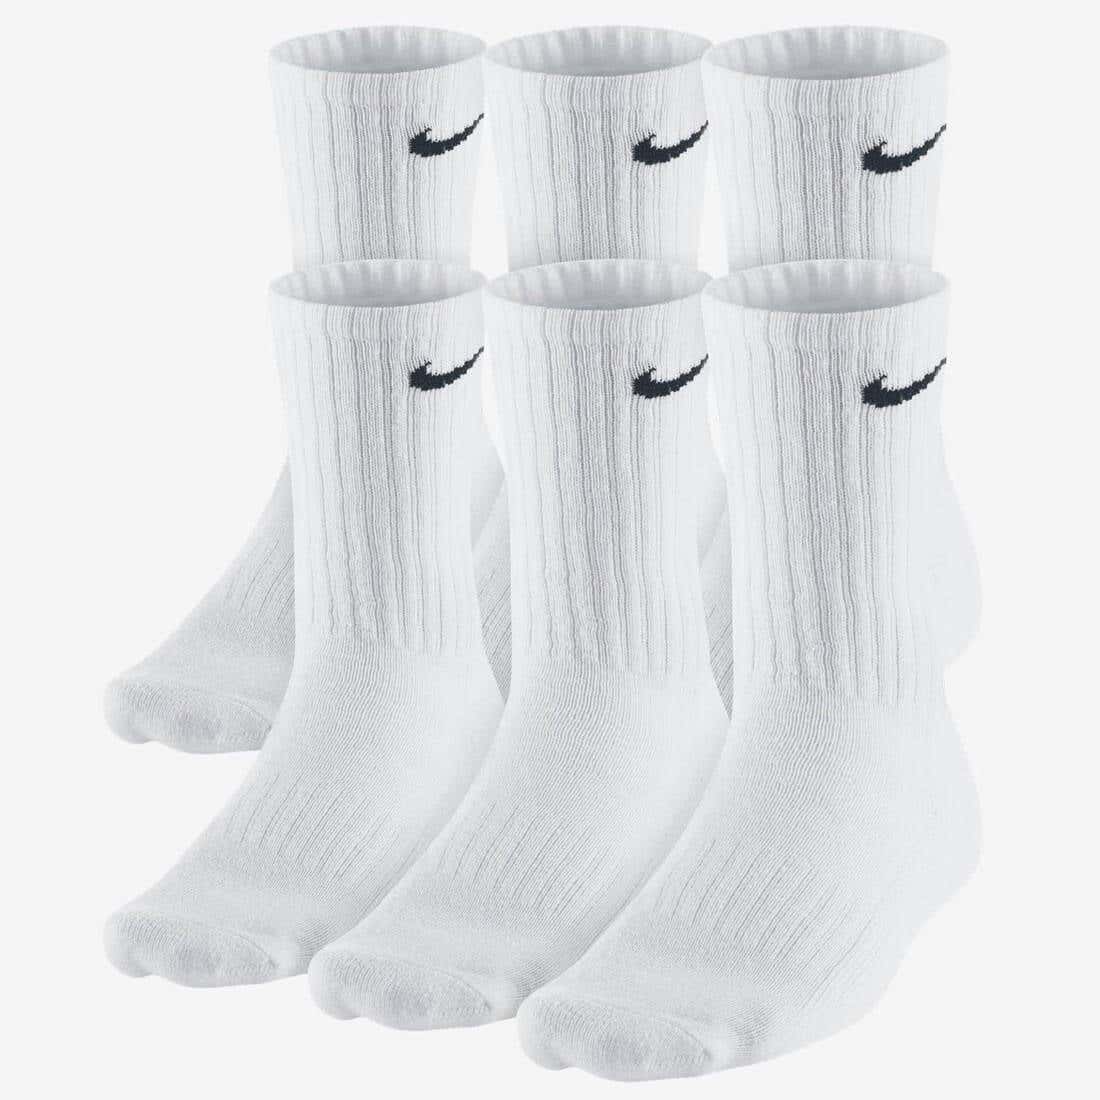 Nike Crew Cotton Socks - 6 Pack | Lacrosse Unlimited